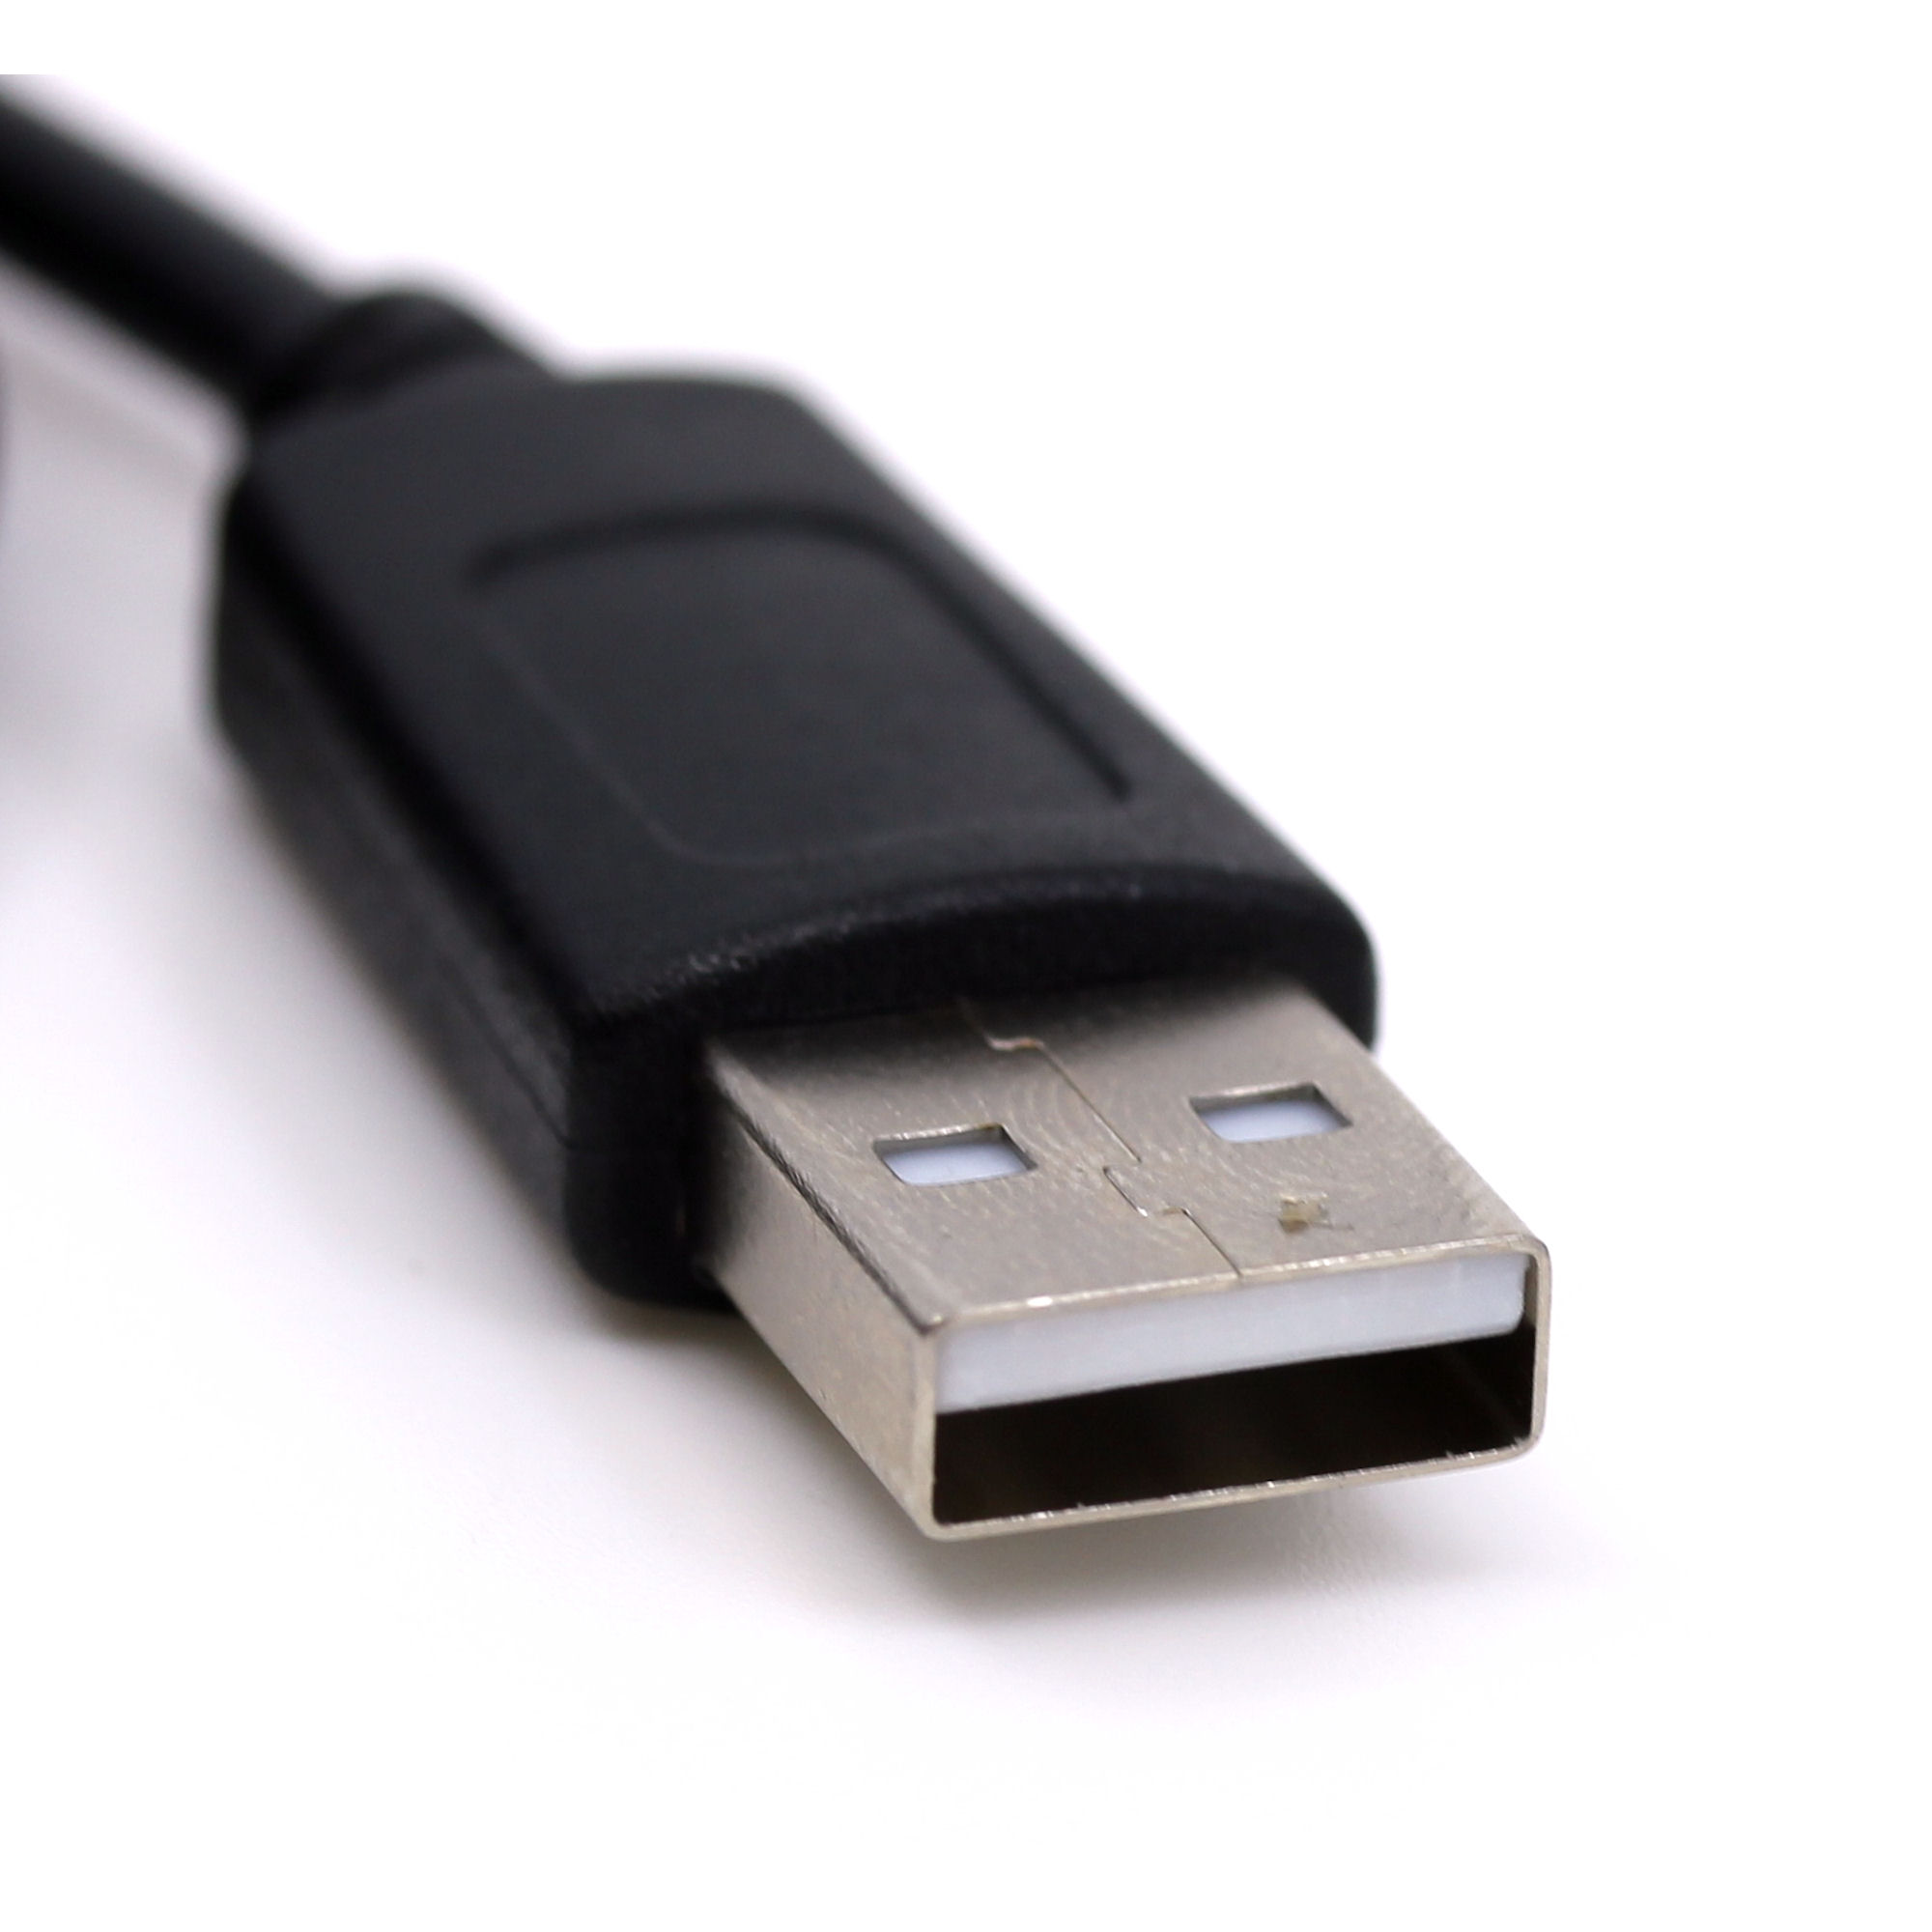 USB Ladekabel für Loewe Klang M1